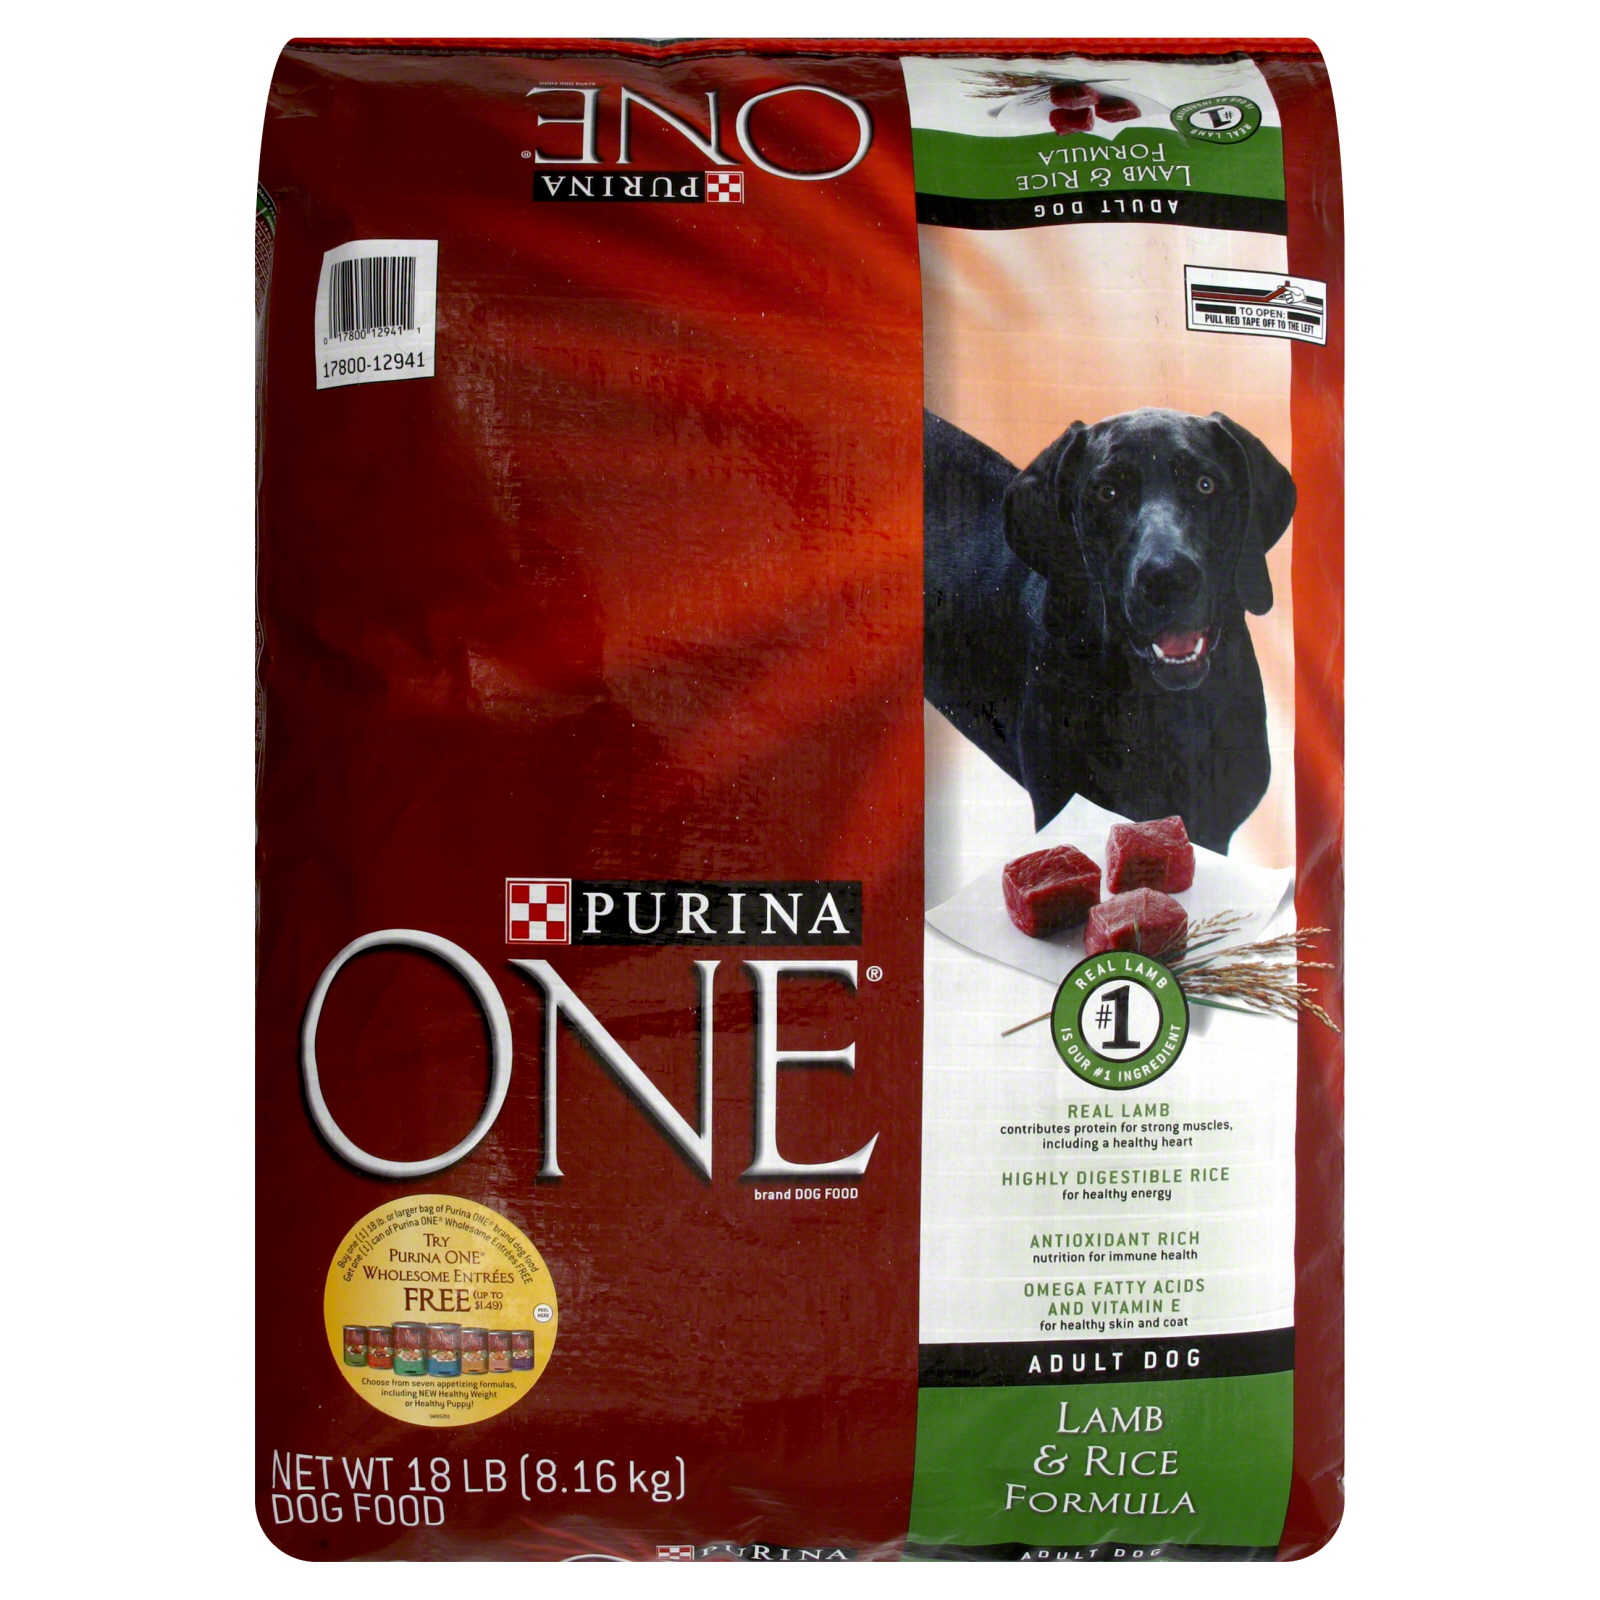 Purina ONE Dog Food, Lamb & Rice Formula, 18 lb (8.16 kg)